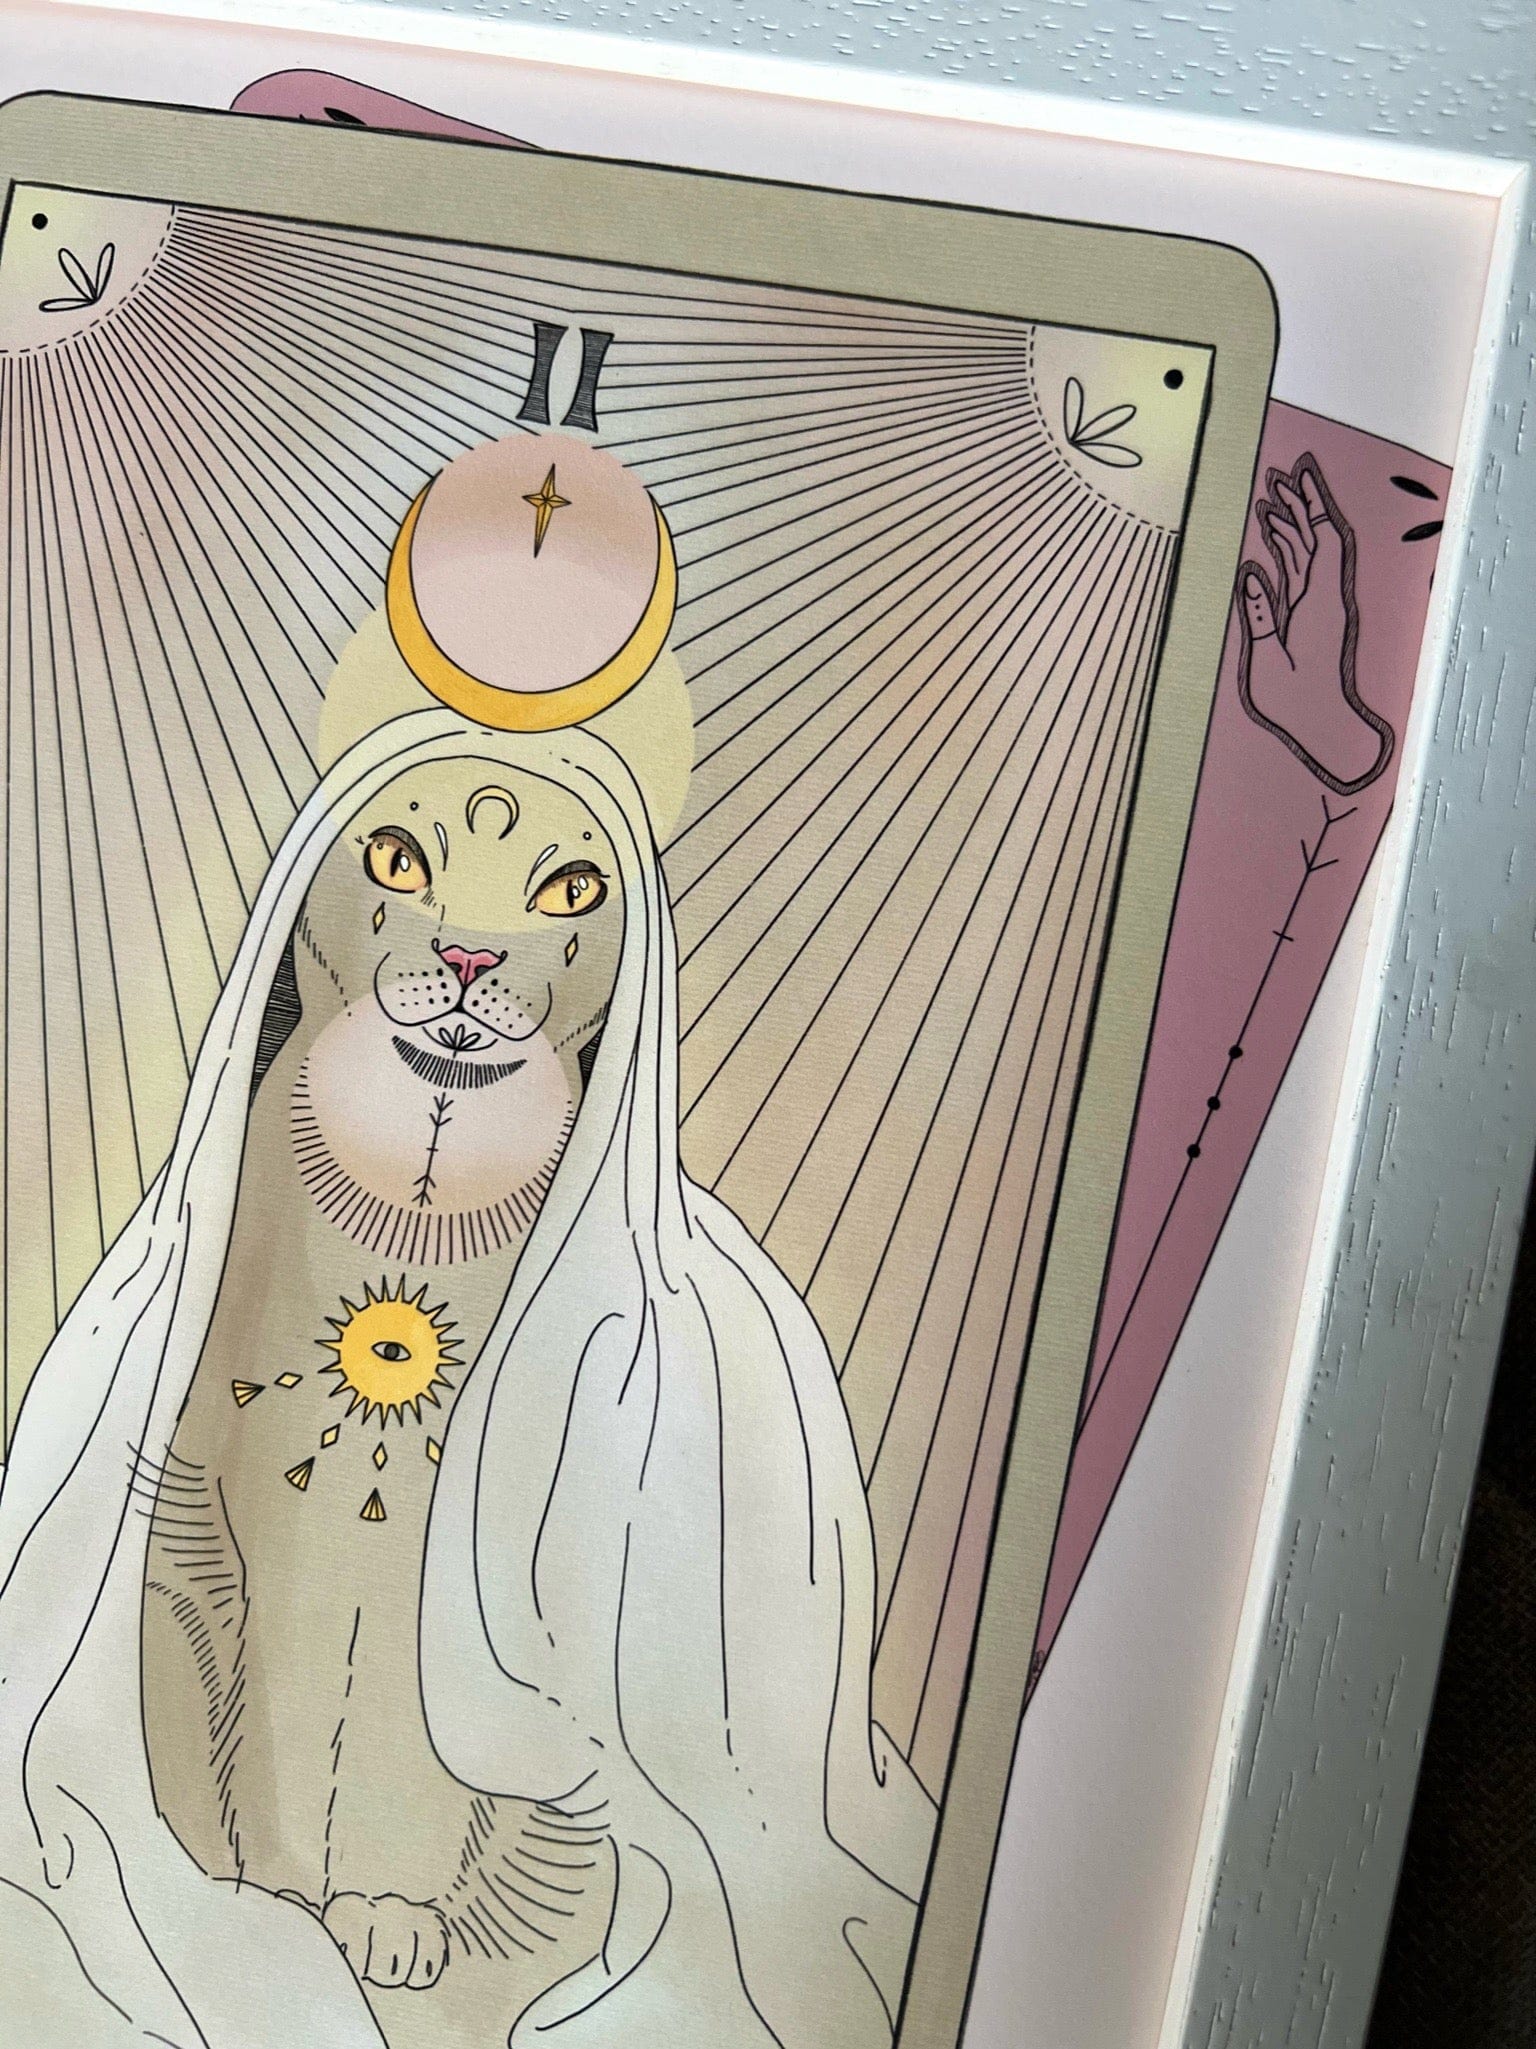 The High Priestess Art Print Tarot Cats Art Print